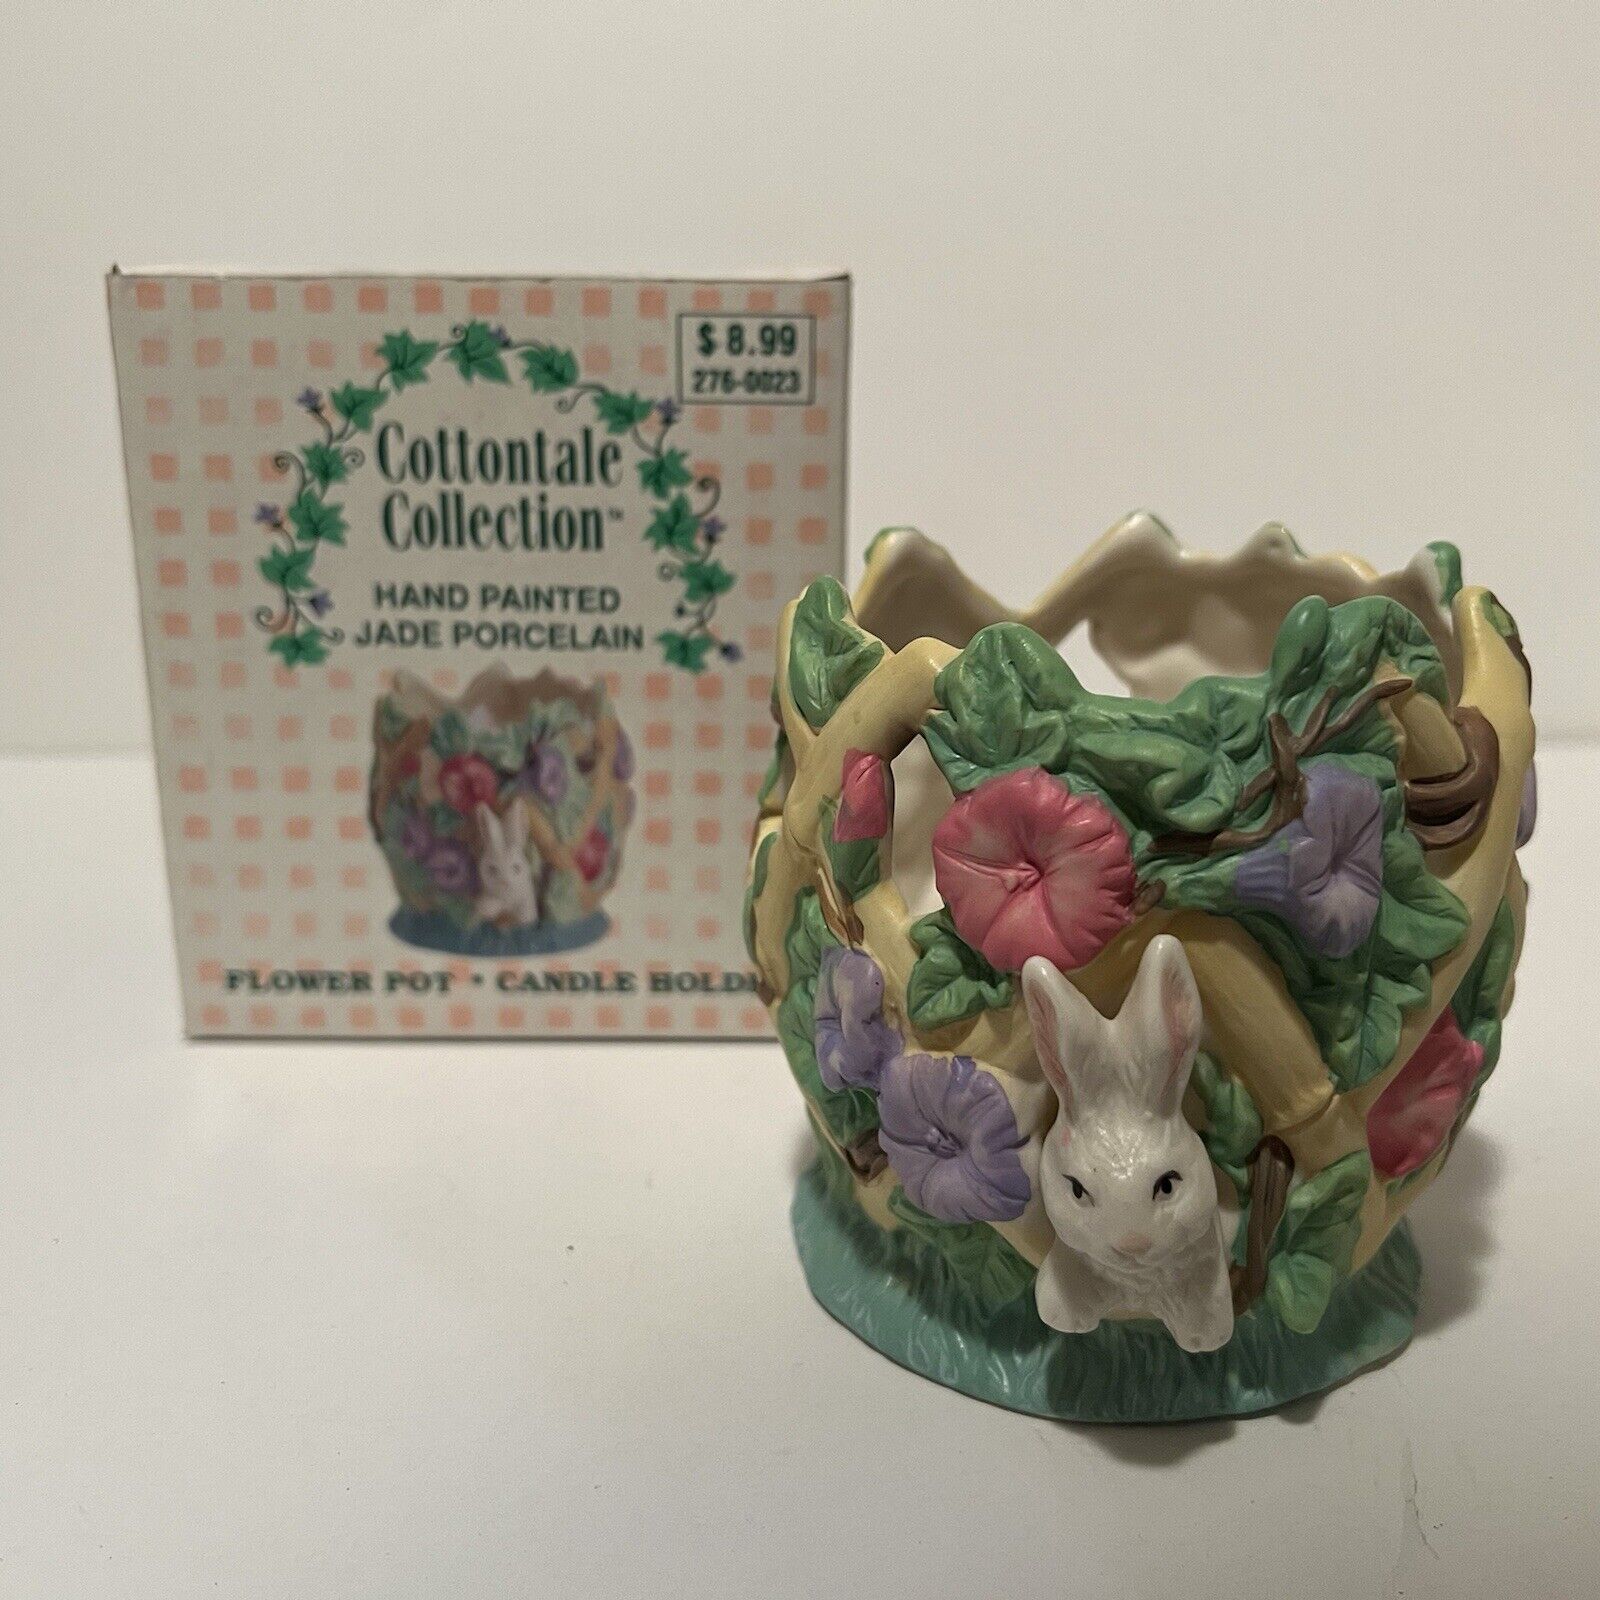 Cottontale Cottages Easter Bunny Flower Pot Candle Holder 1995